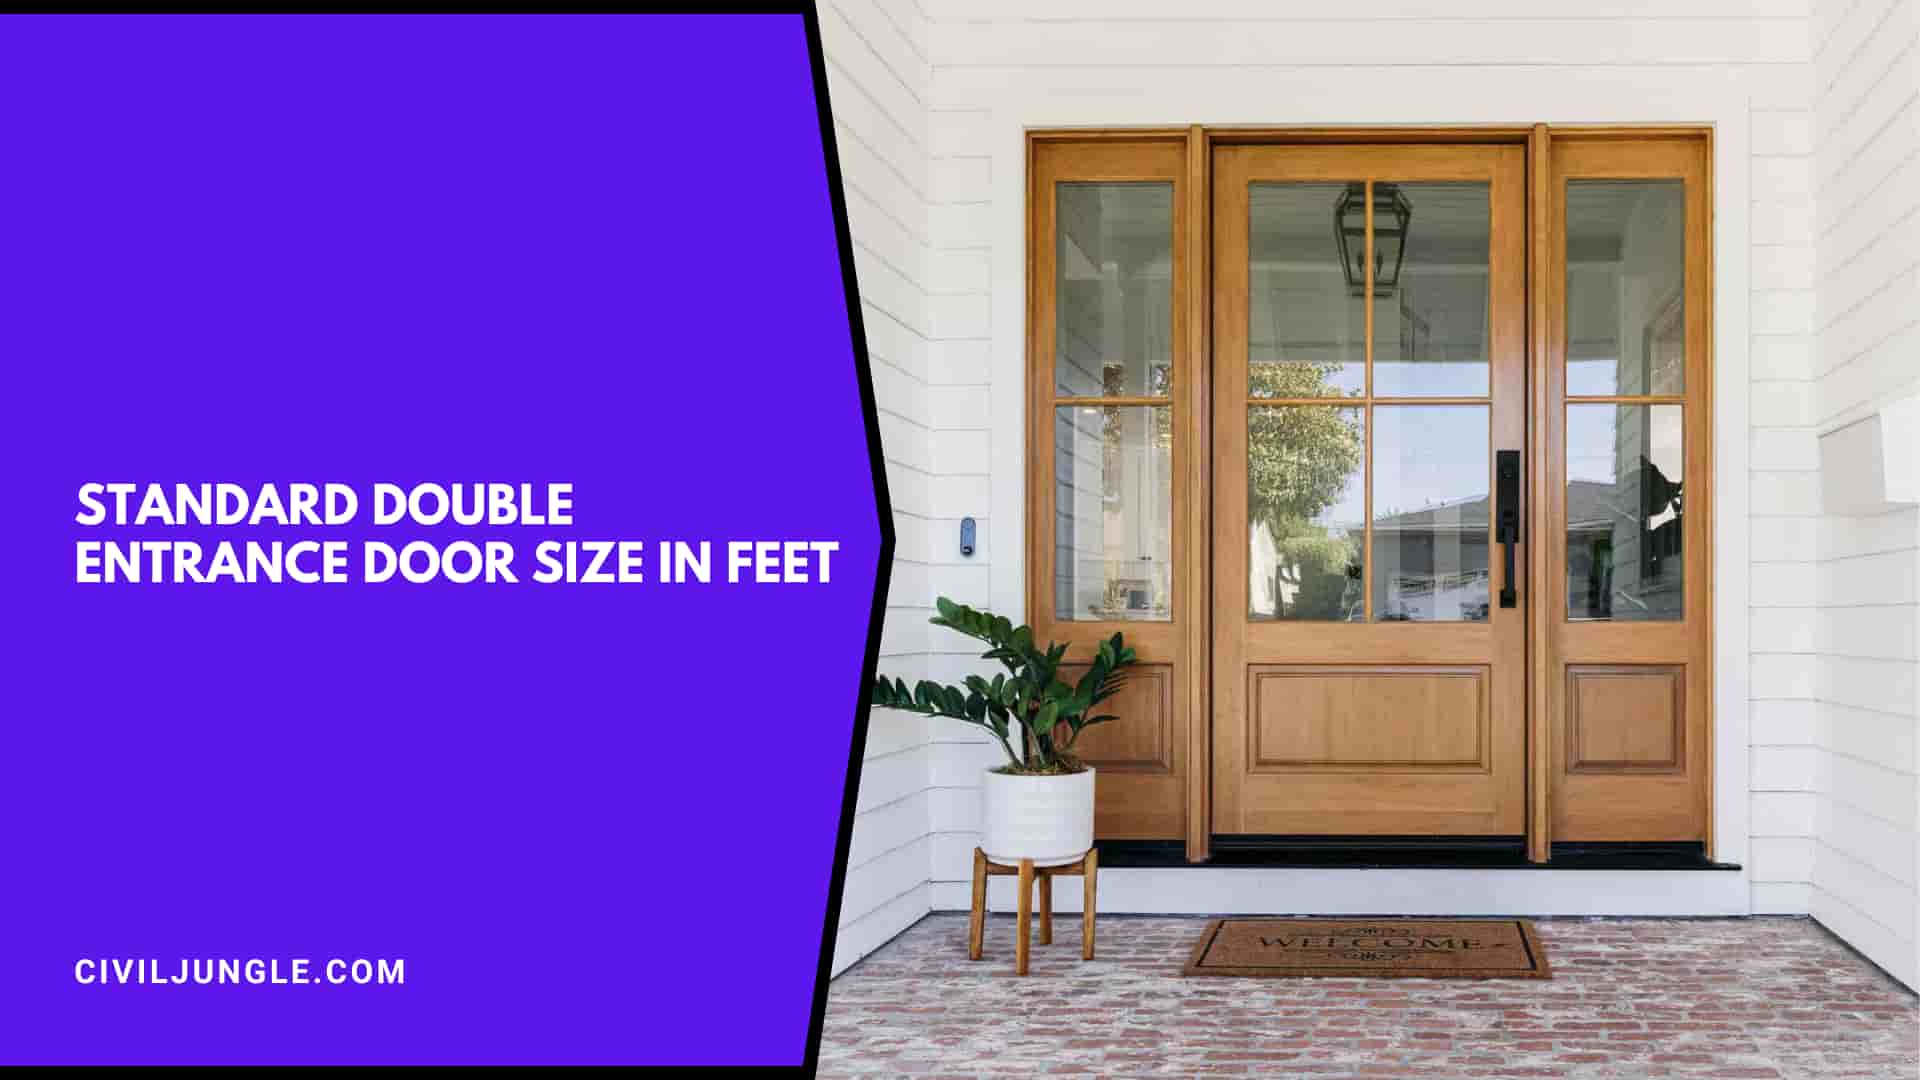 Standard Double Entrance Door Size in Feet